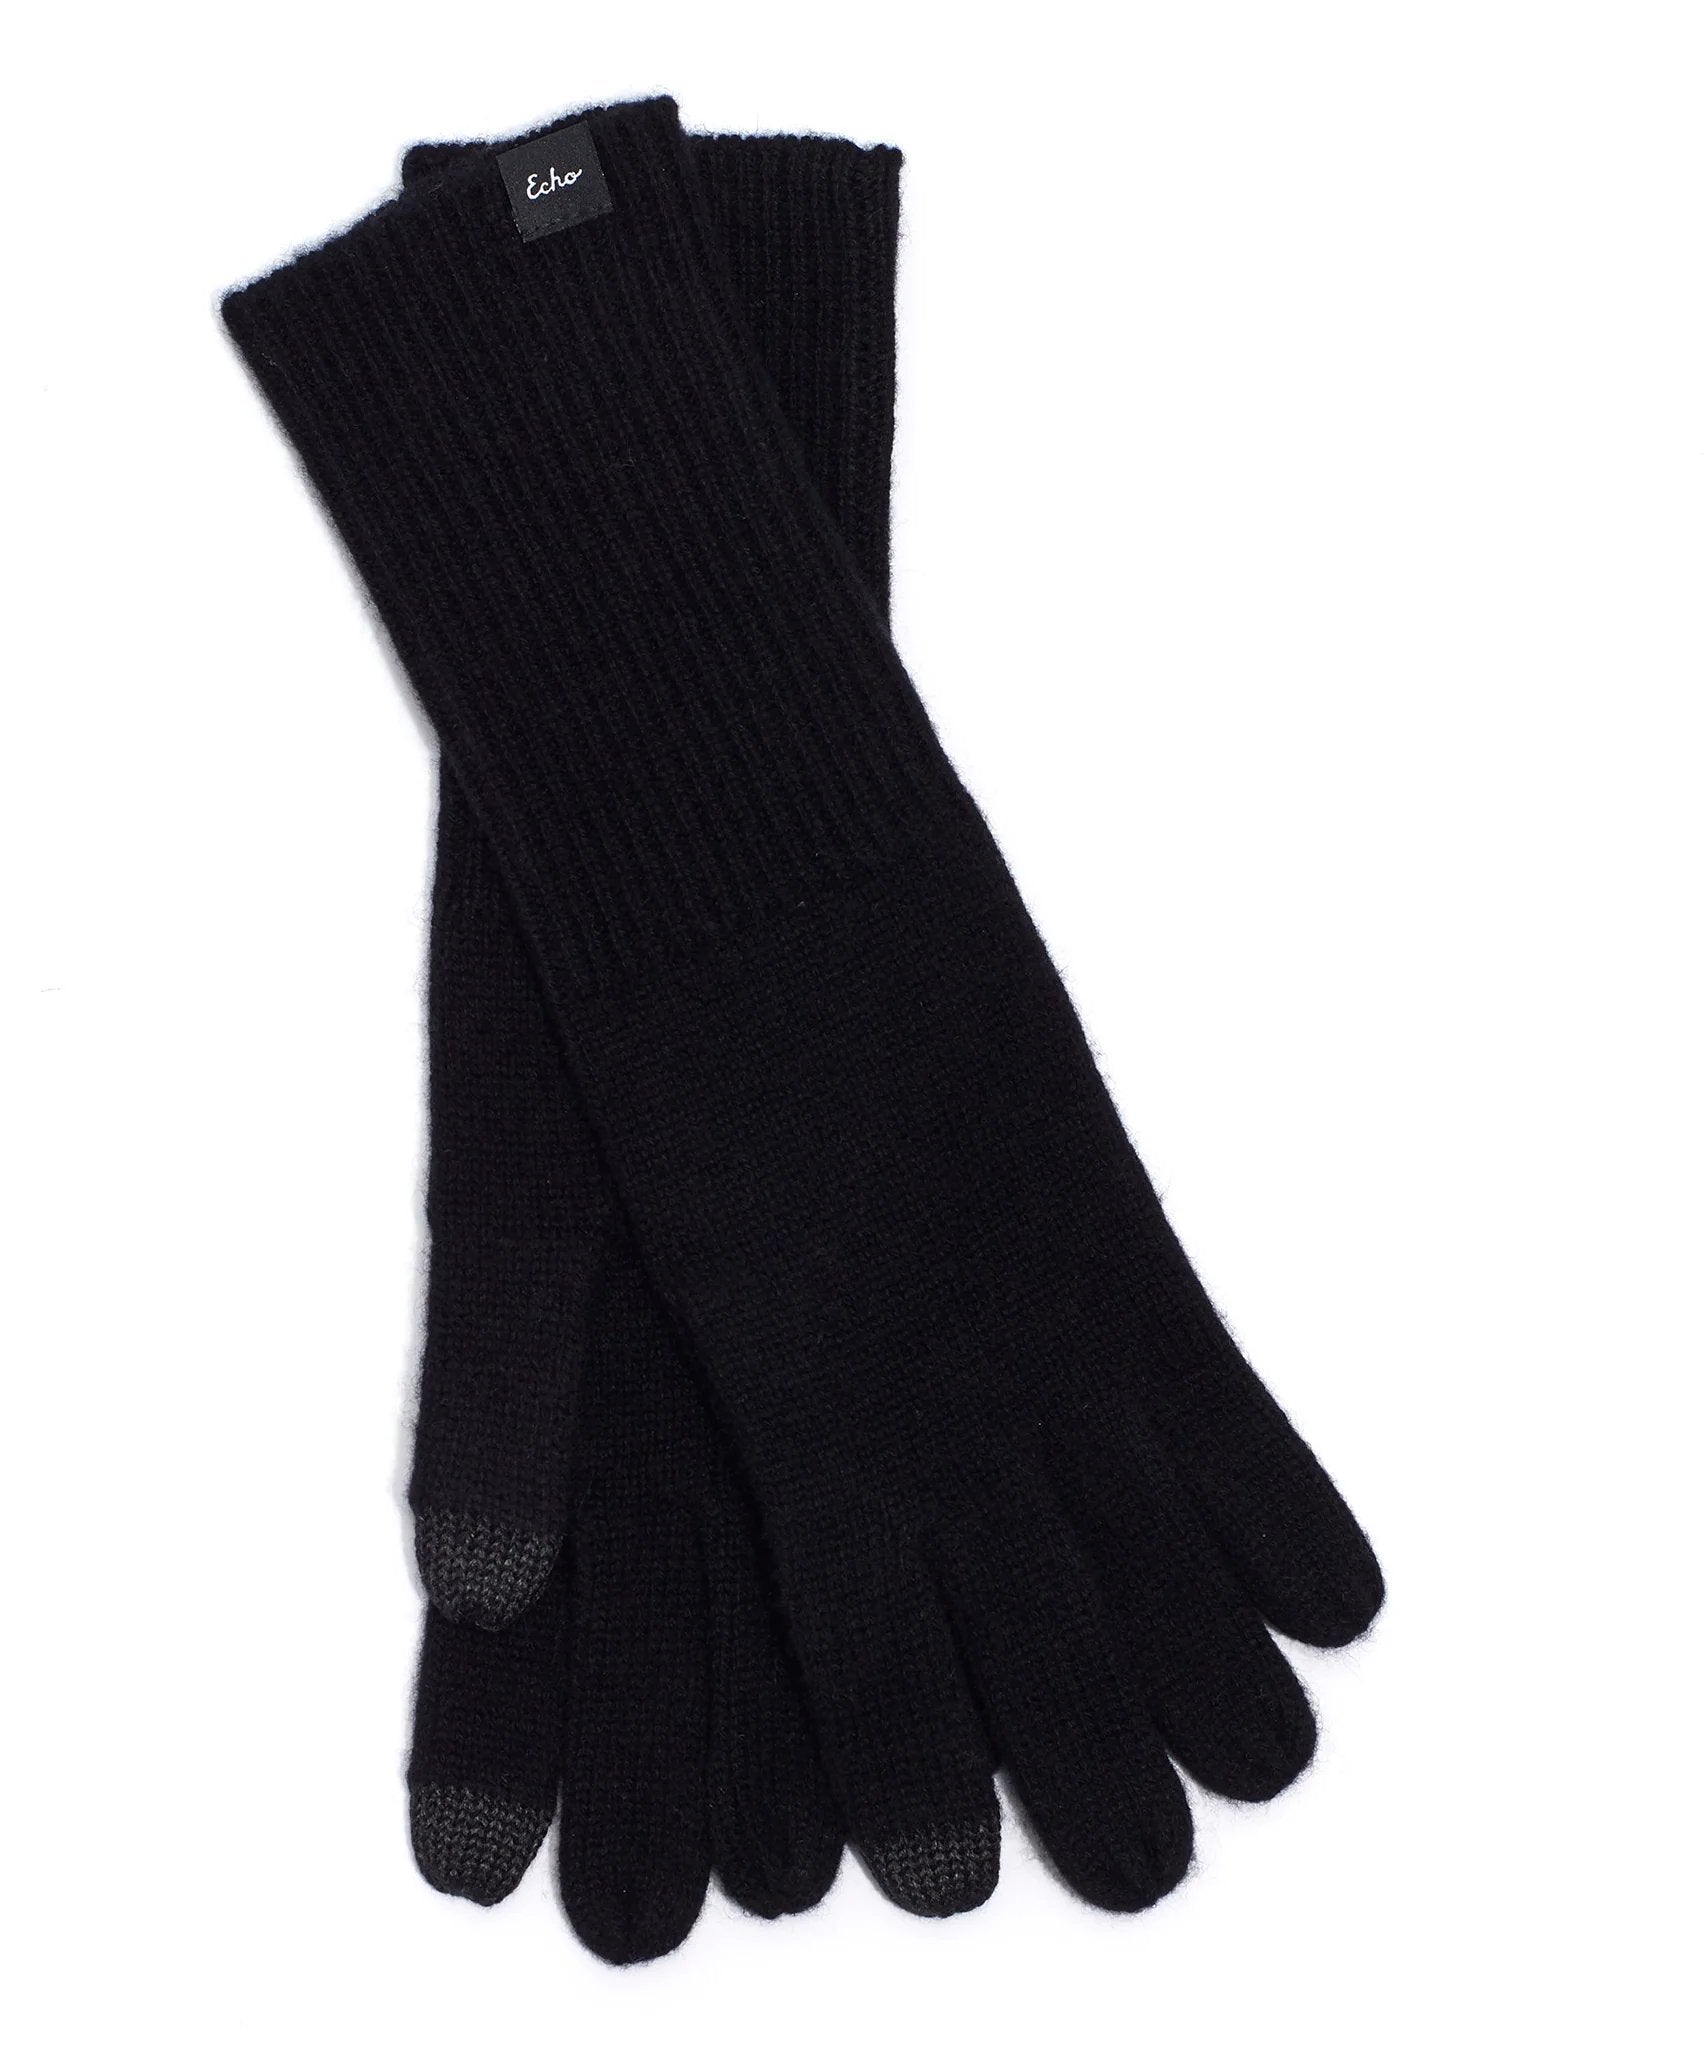 Wool/Cashmere Gloves - Echo - Danali - EC0613-black